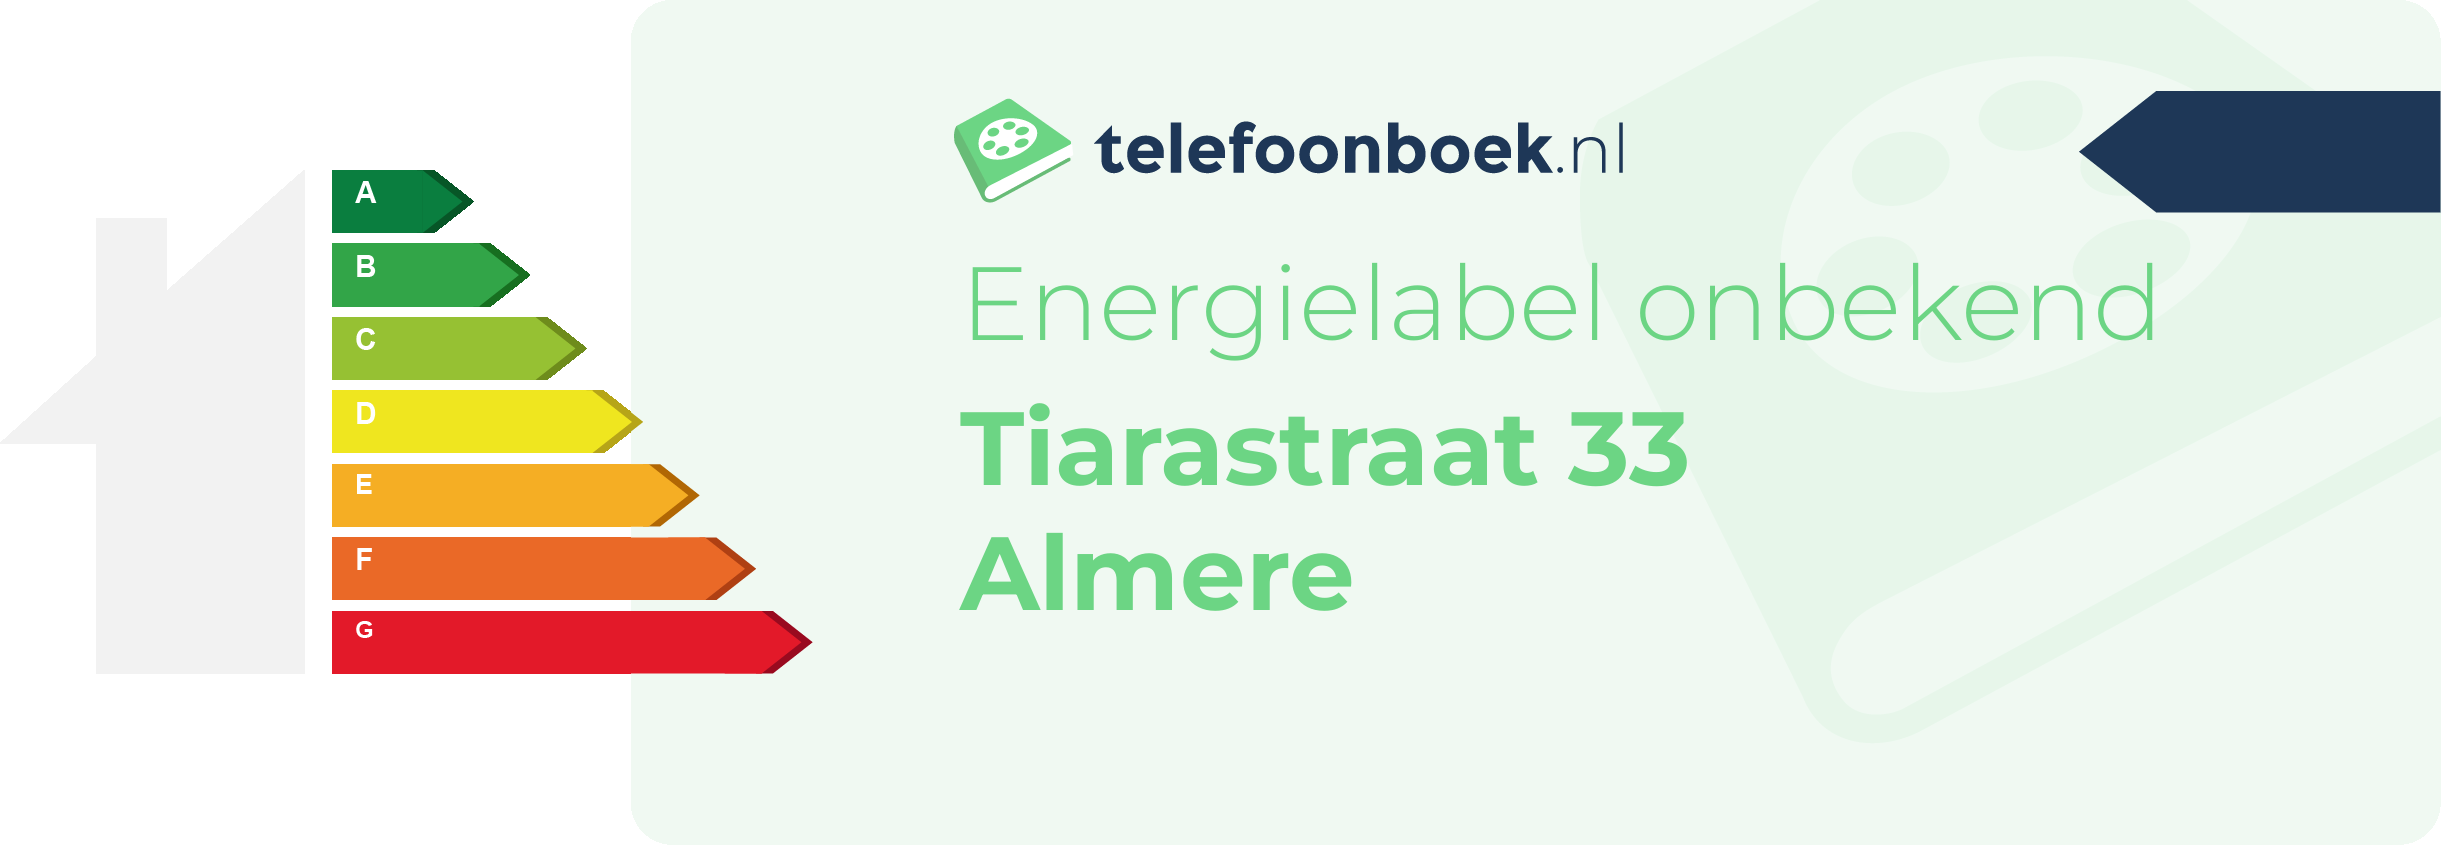 Energielabel Tiarastraat 33 Almere